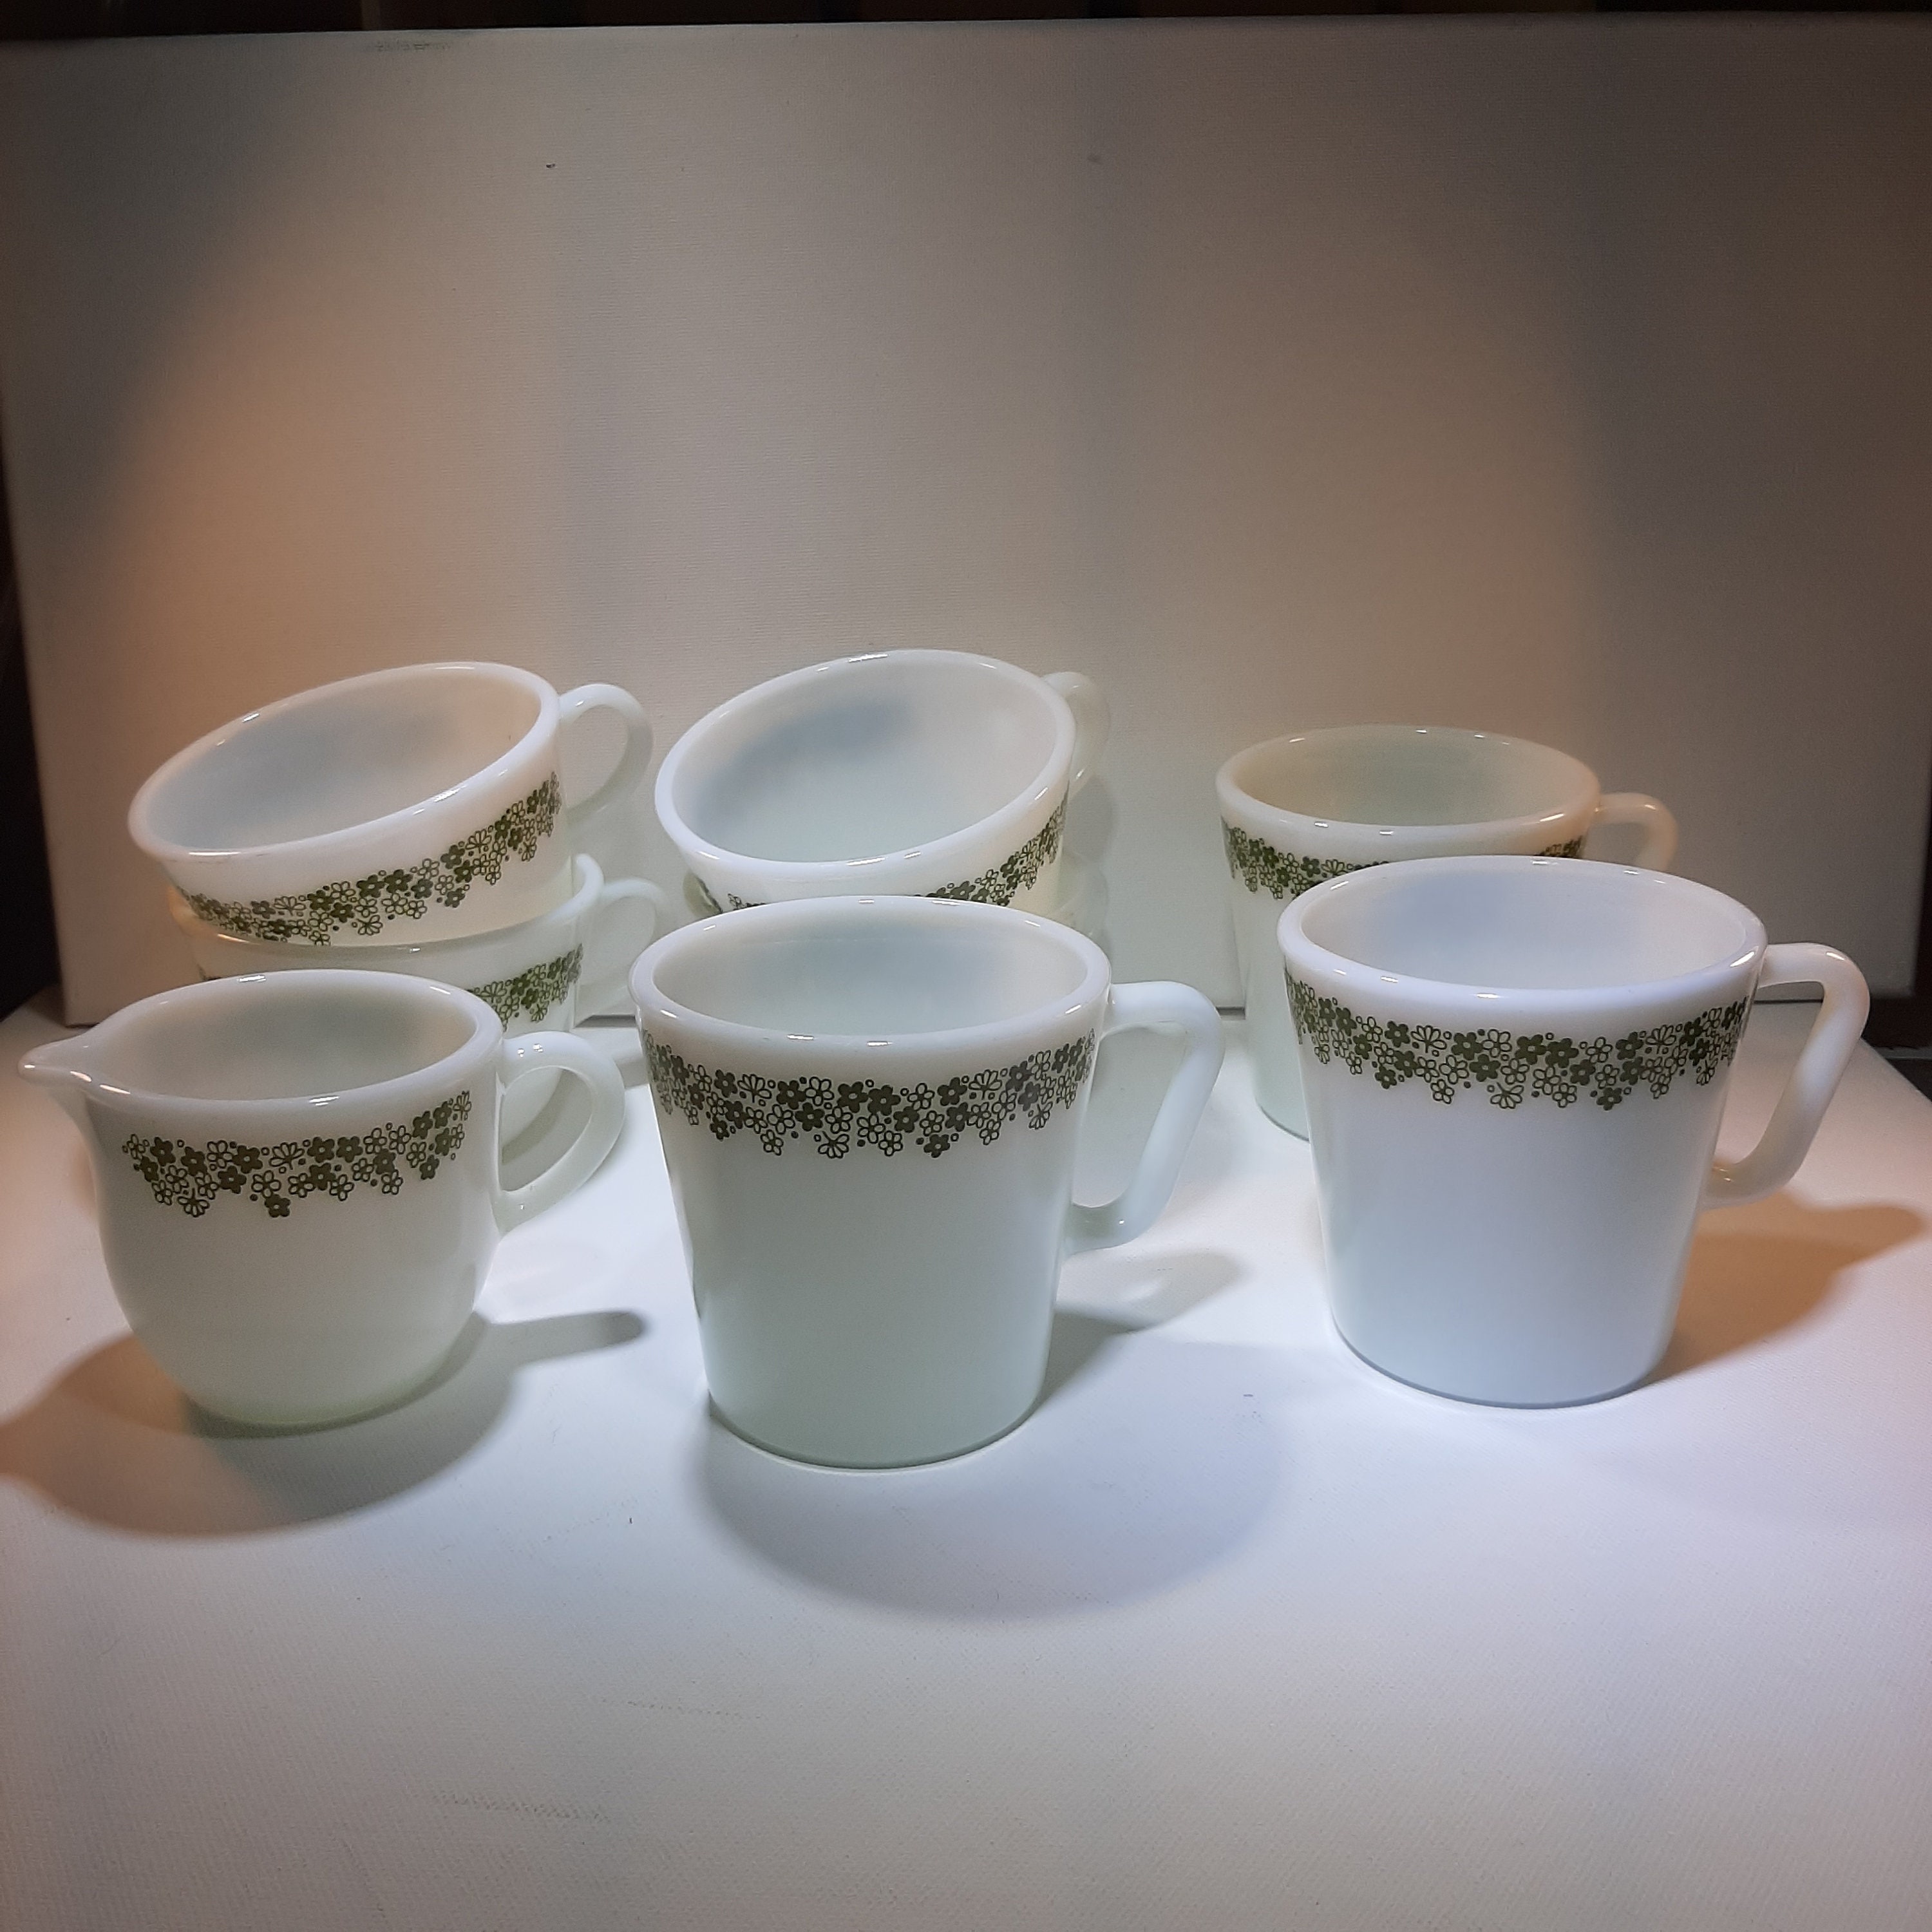 Daisy Painted Glass Mugs, Glass Cup Set